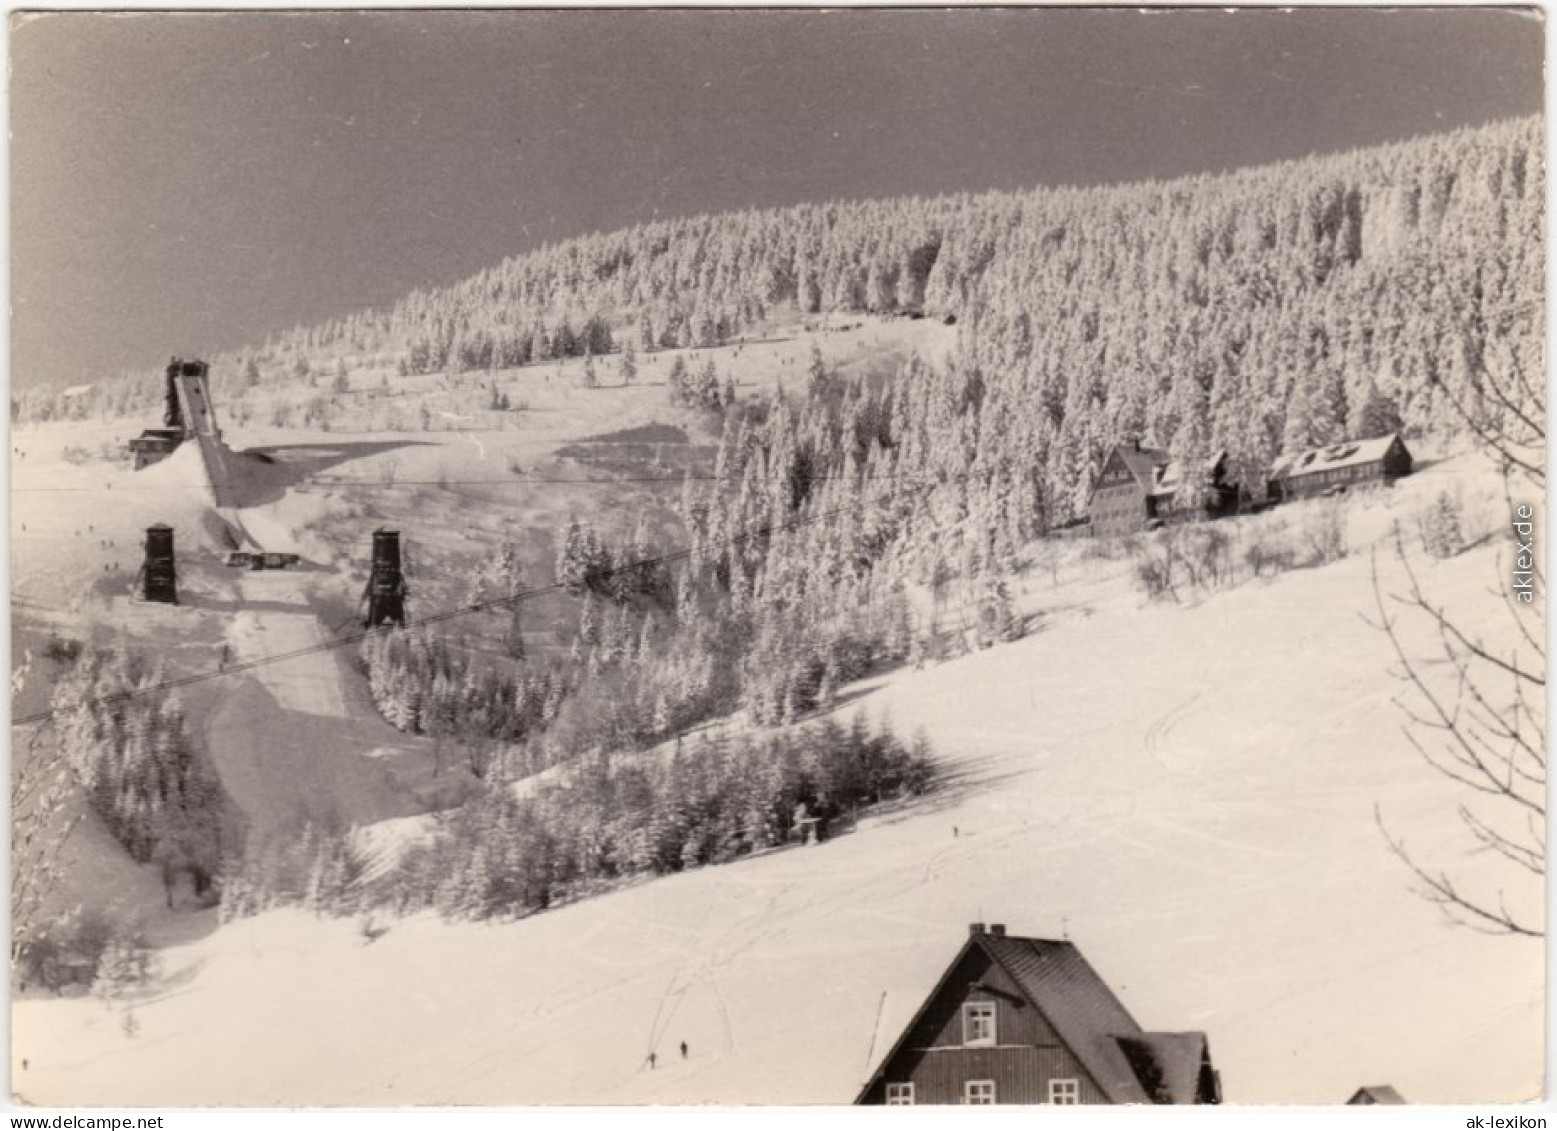 Oberwiesenthal Spungschanzen Im Winter Foto Ansichtskarte ERzegbirge 1964 - Oberwiesenthal